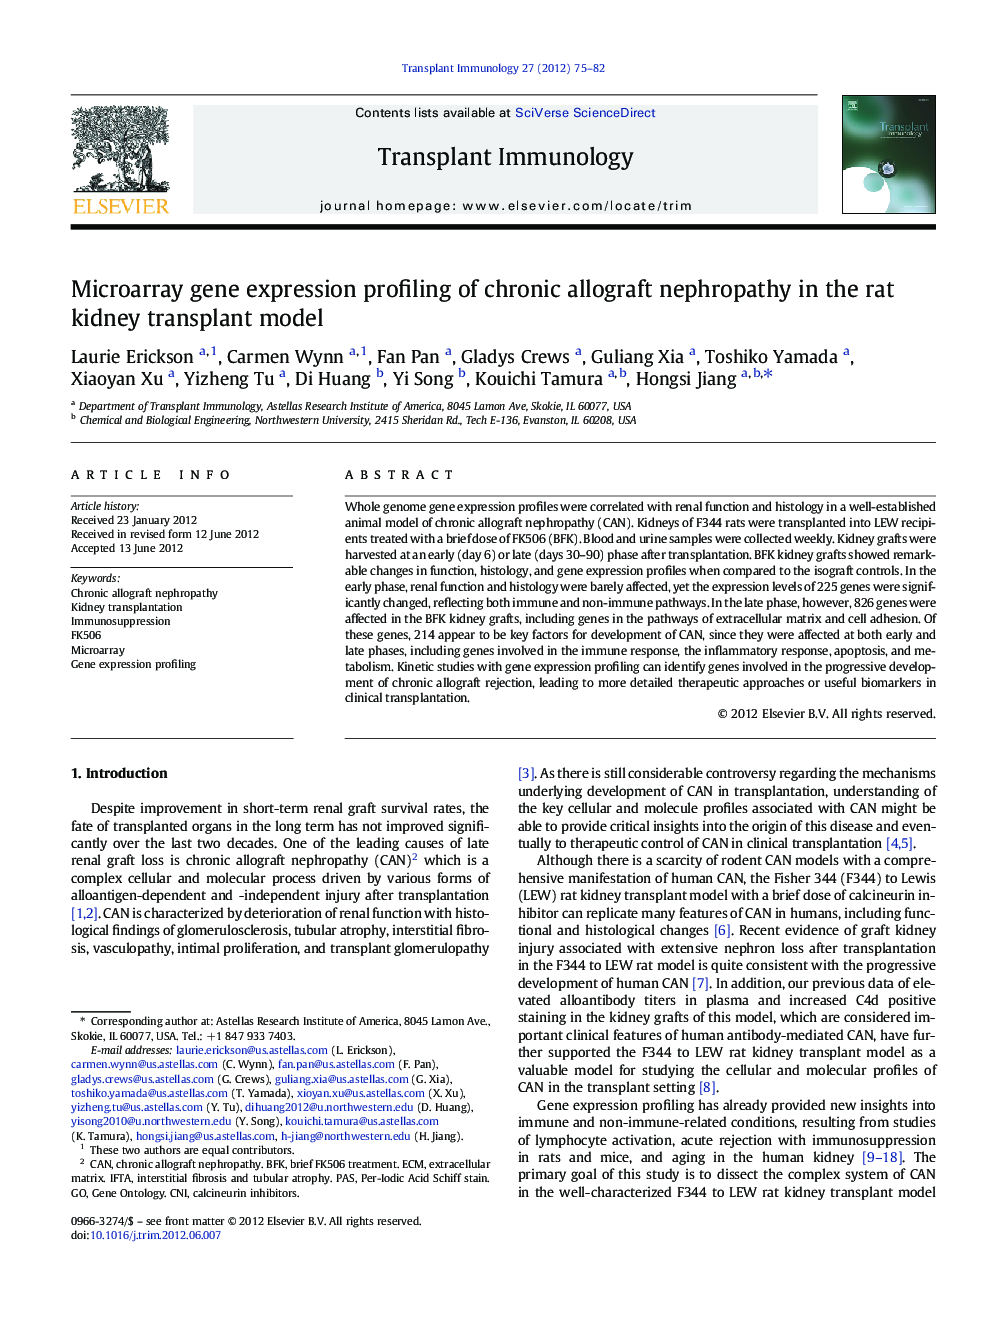 Microarray gene expression profiling of chronic allograft nephropathy in the rat kidney transplant model